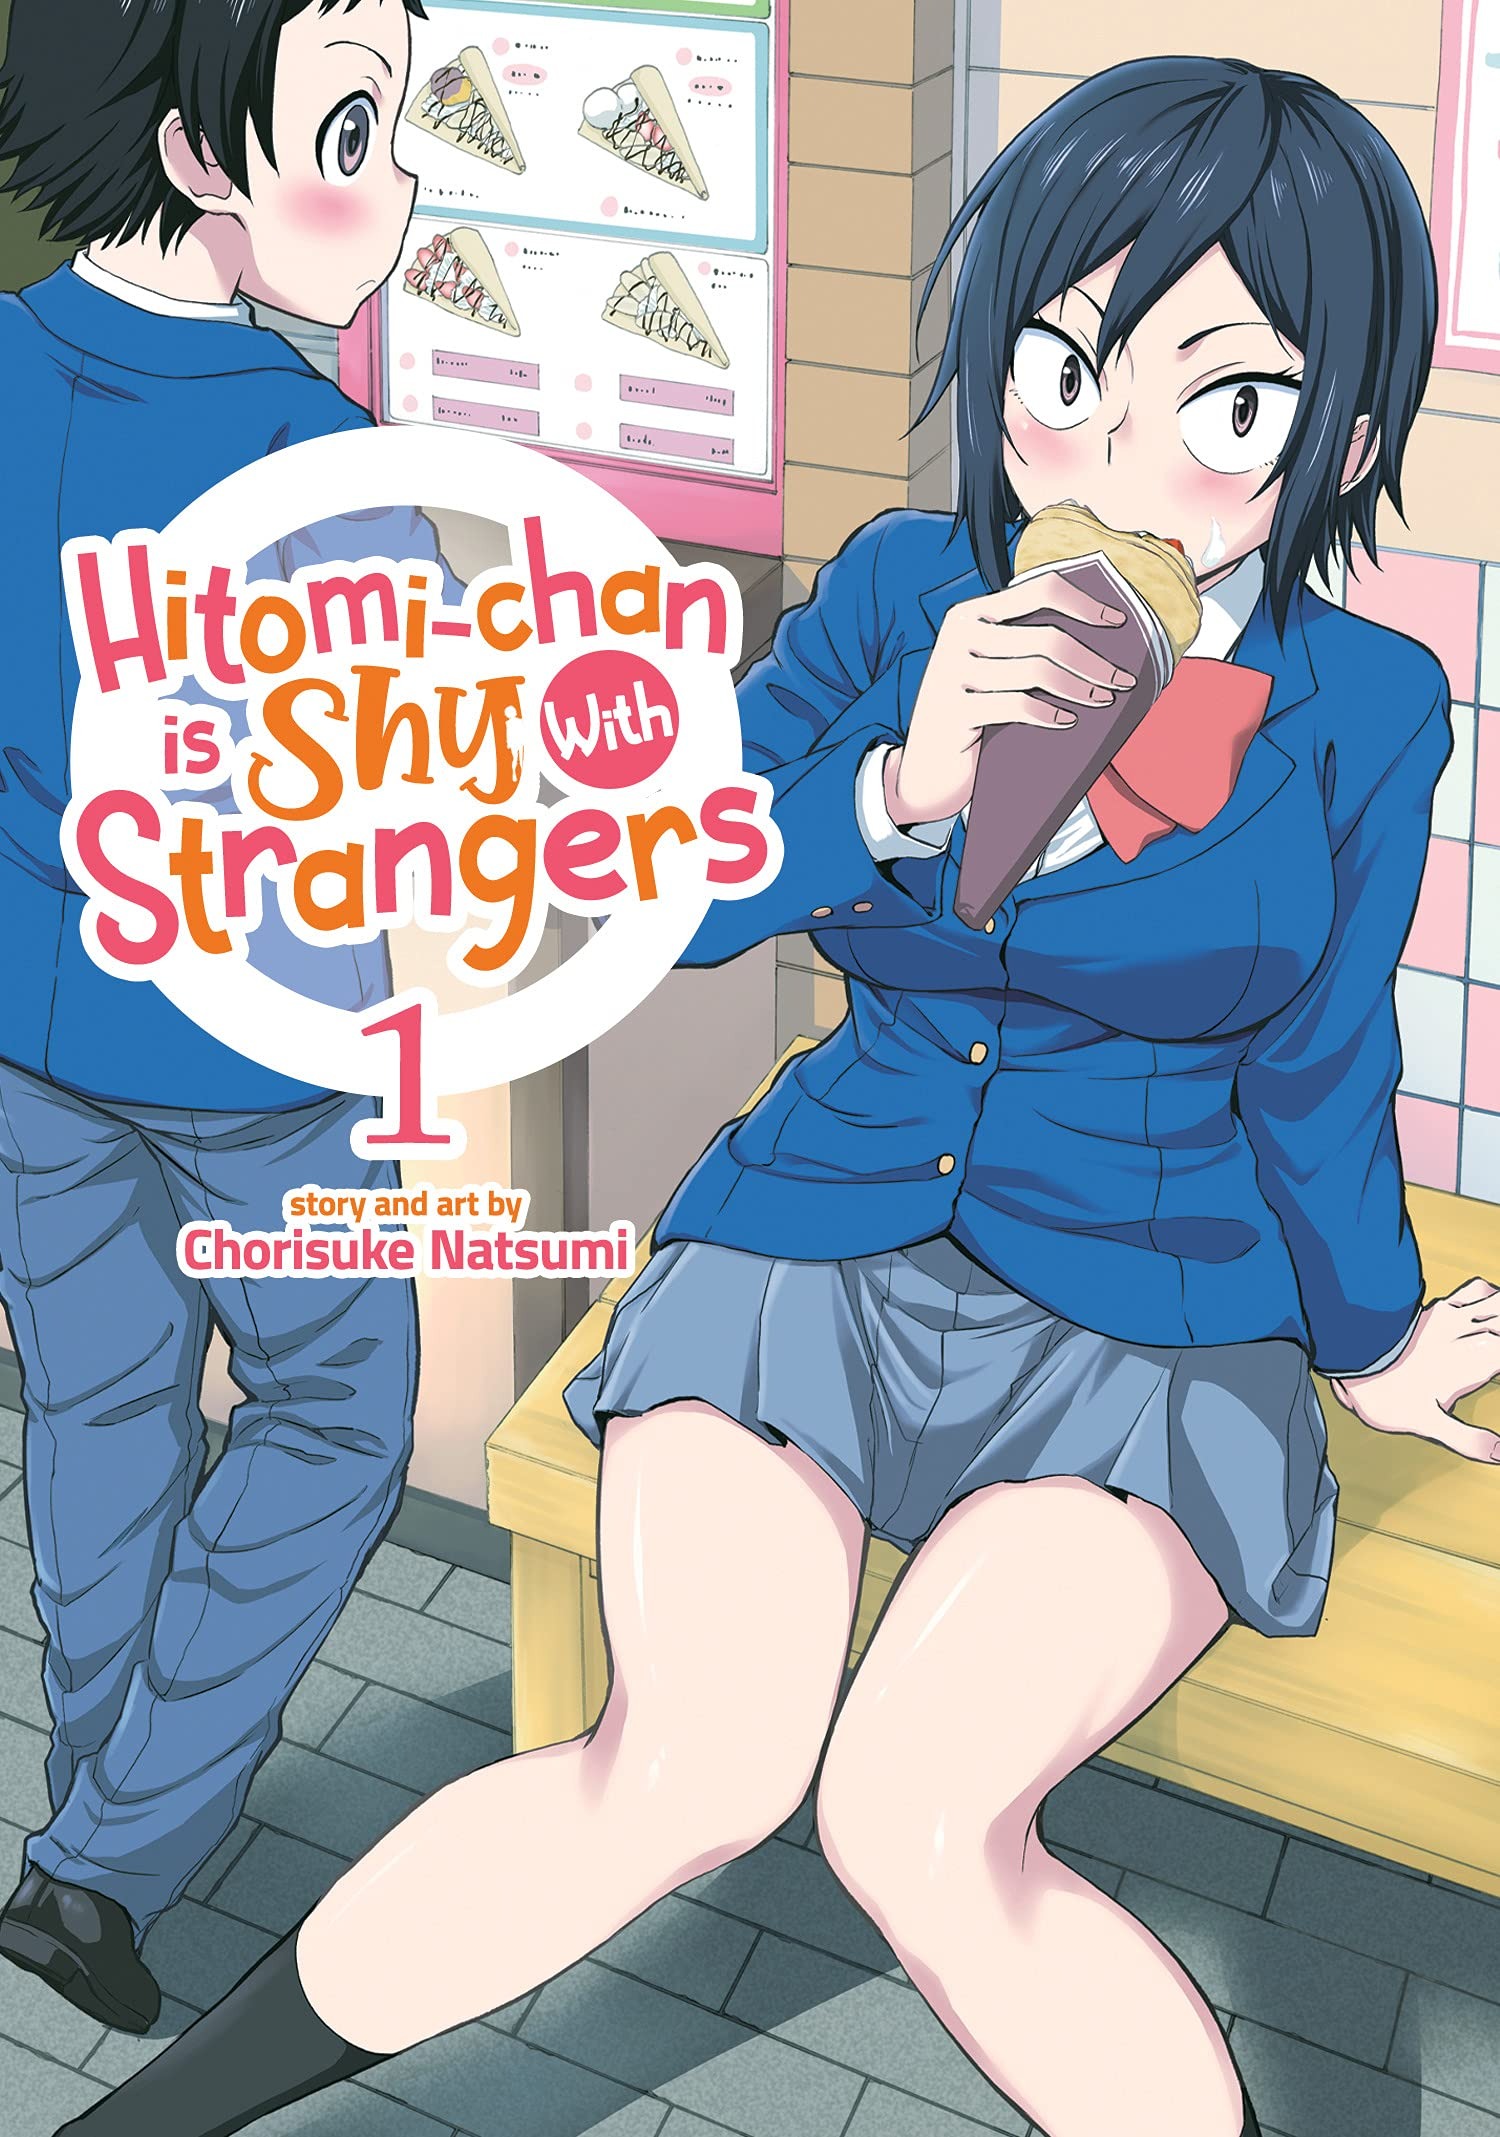 Hitomi Chan is Shy with Strangers Manga Volume 1